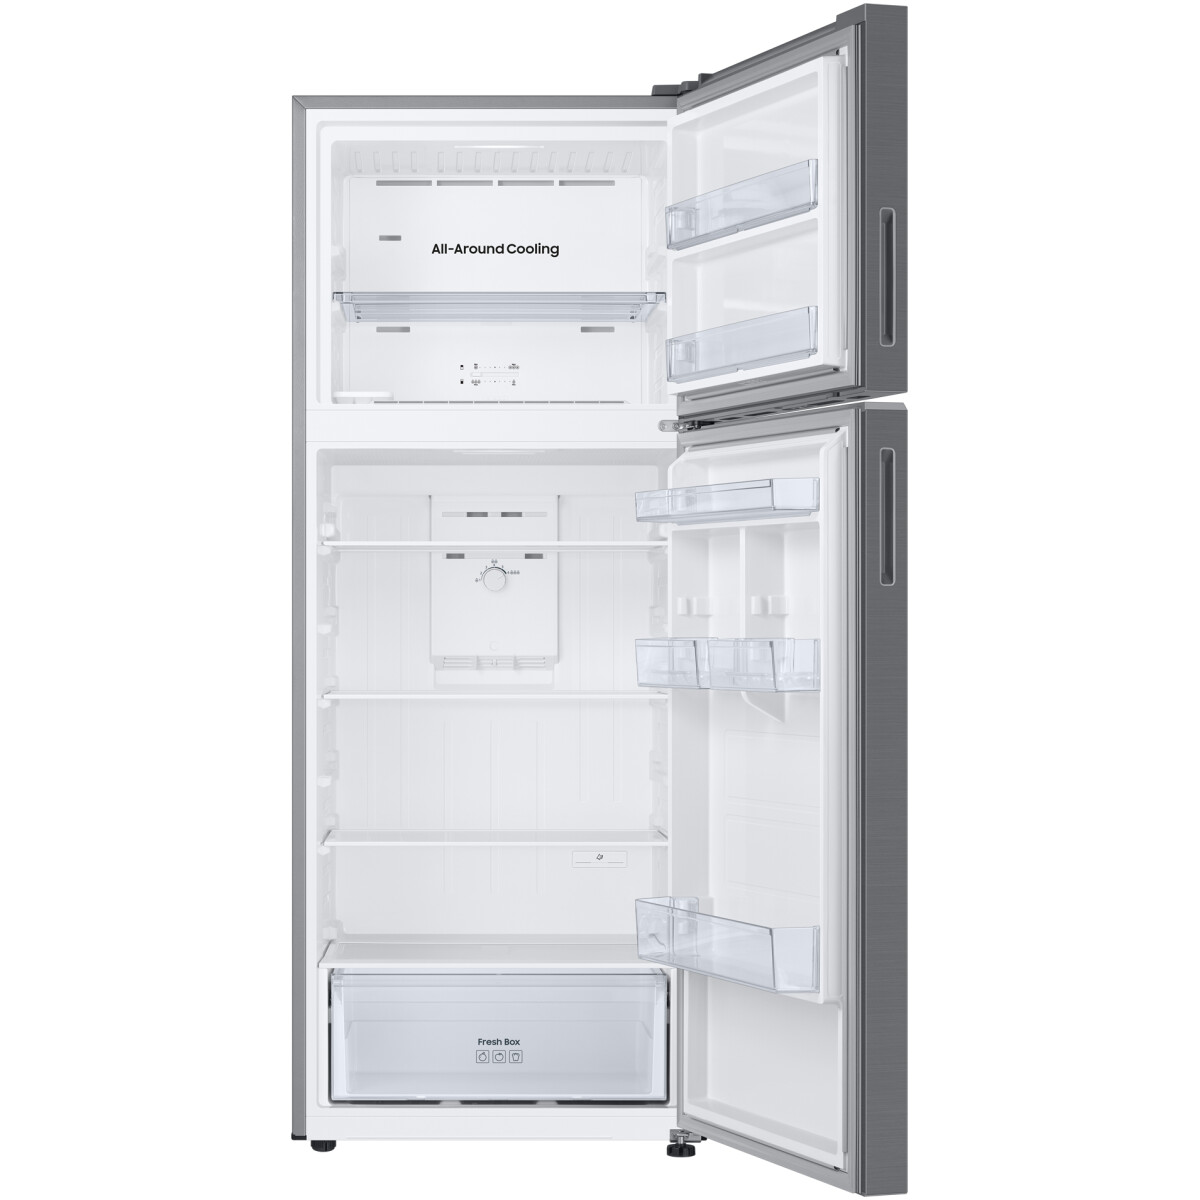 SG Top Mount Freezer Refrigerator with Optimal Fresh+, 463L Net Capacity